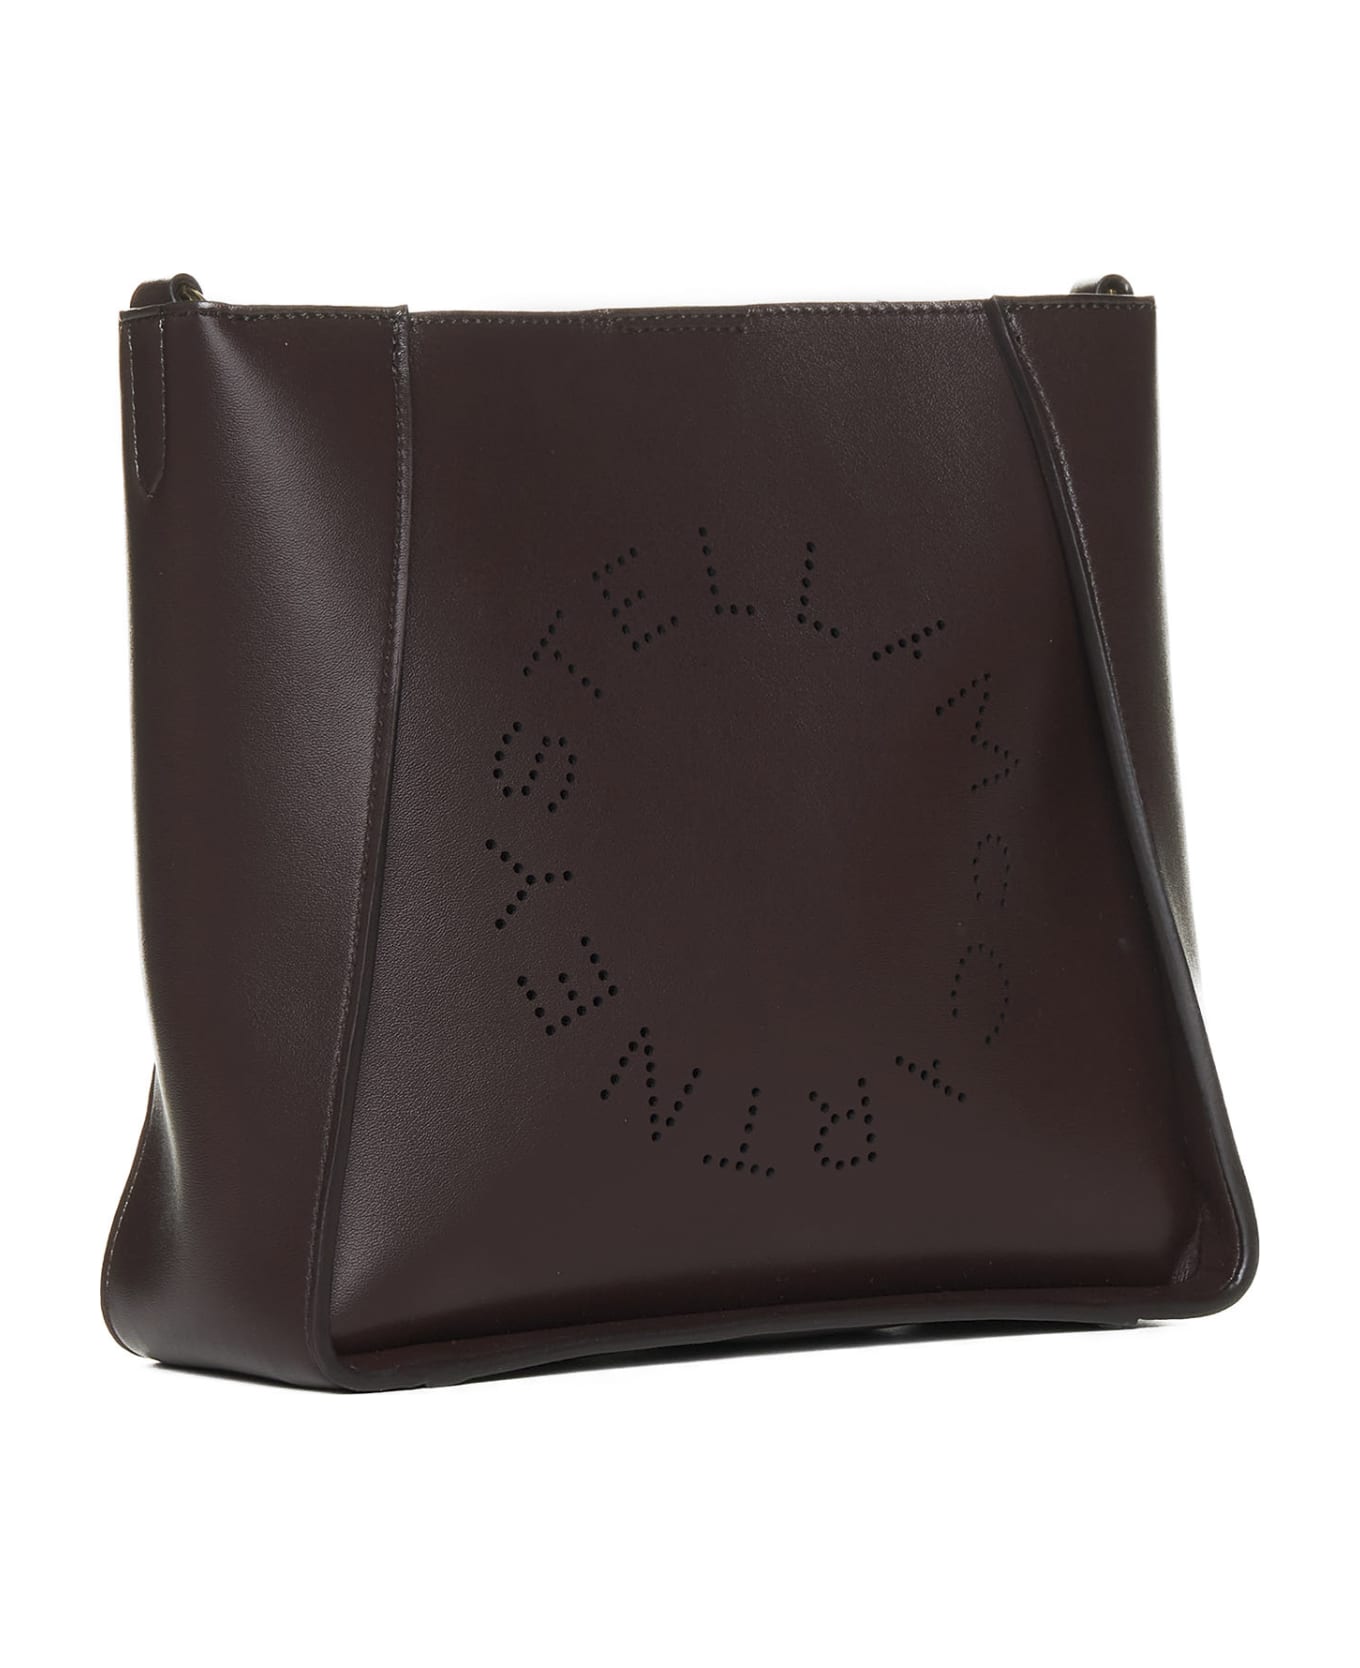 Stella McCartney Crossbody Bag - Chocolate Brown